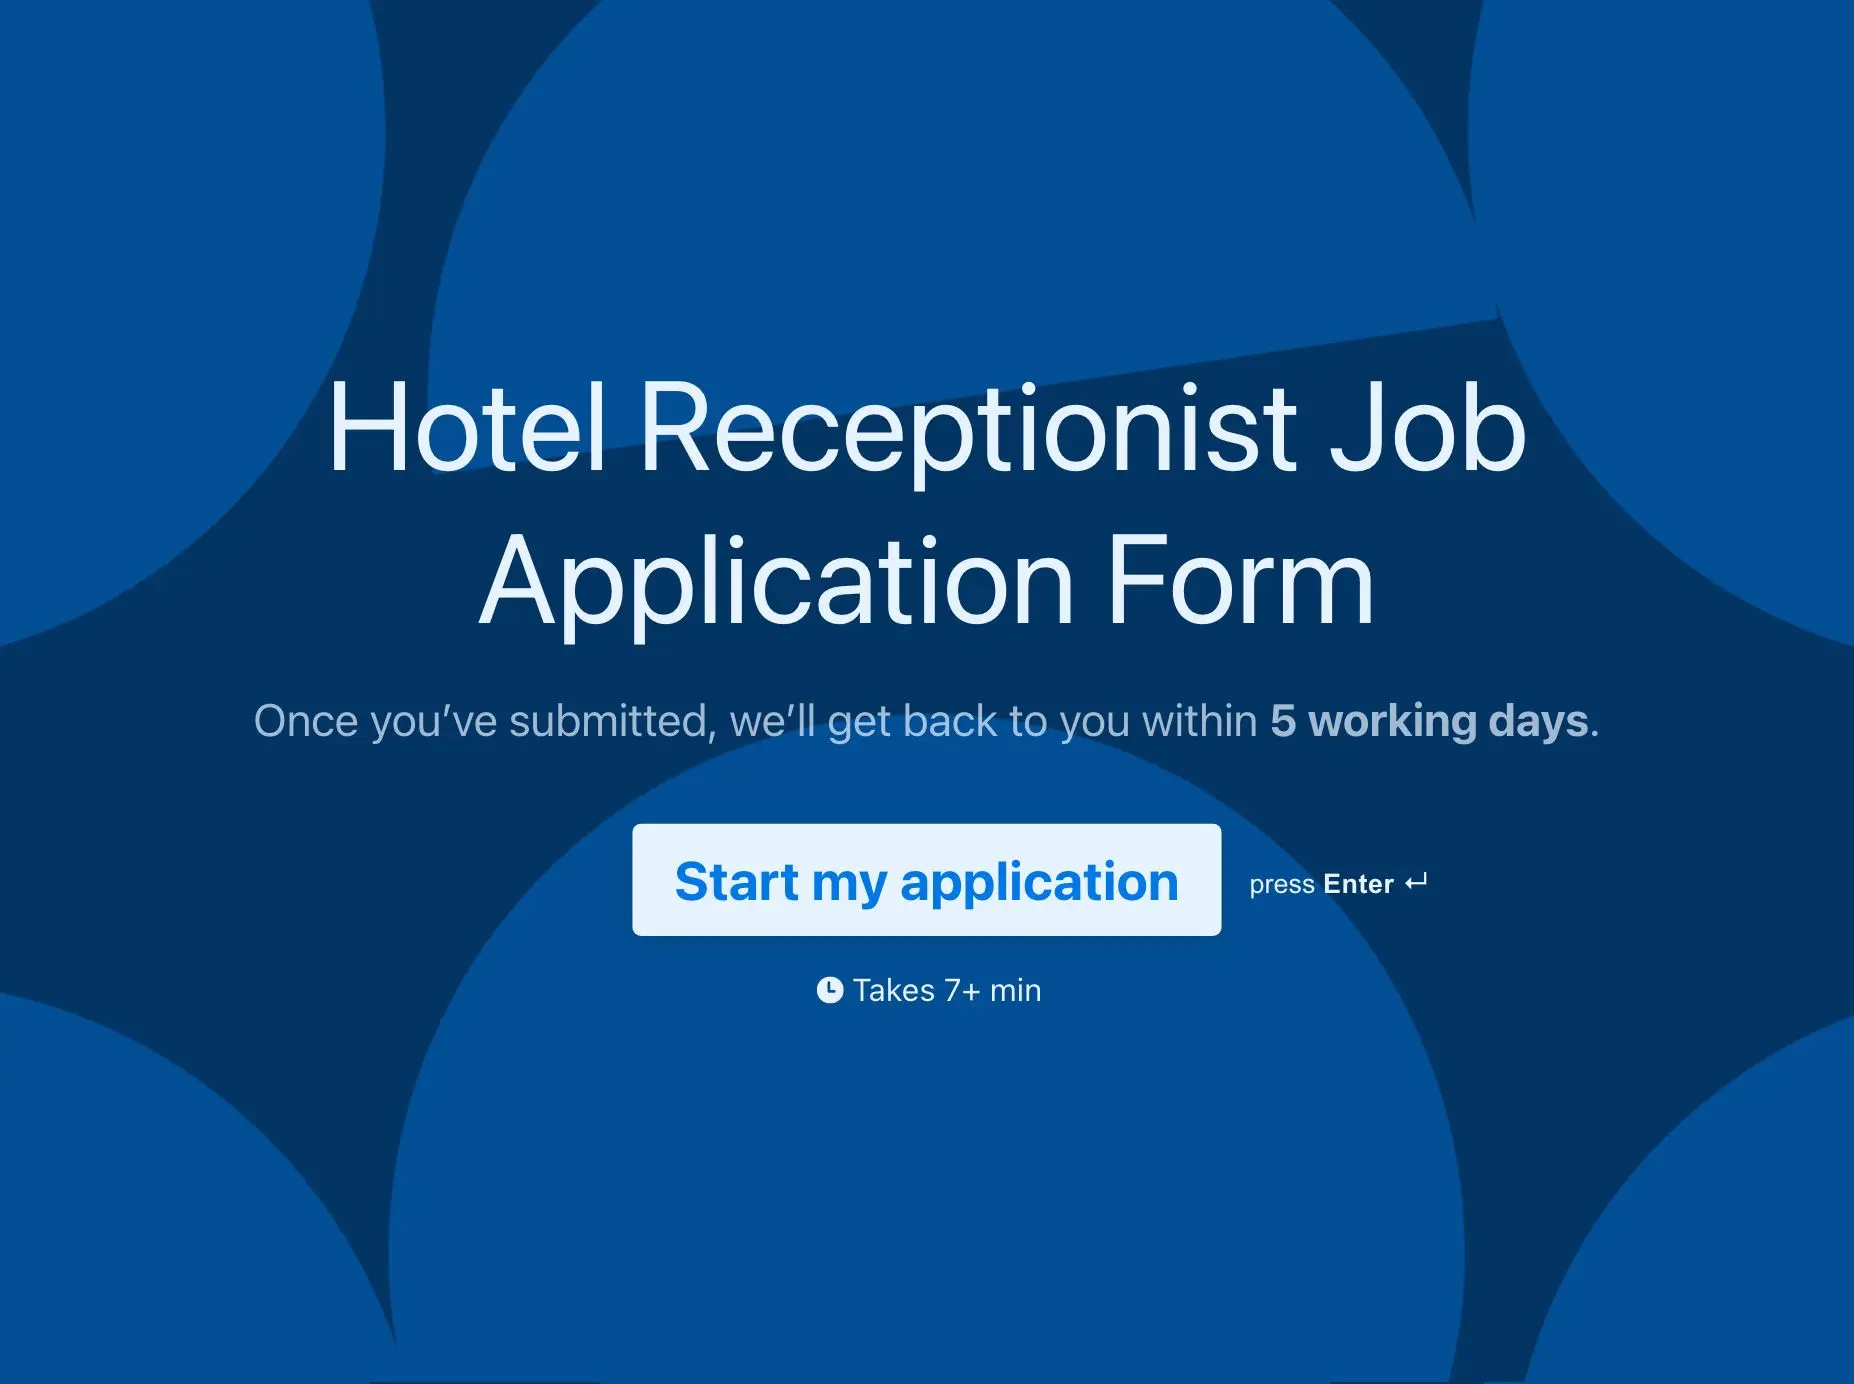 Hotel Receptionist Job Application Form Template Hero